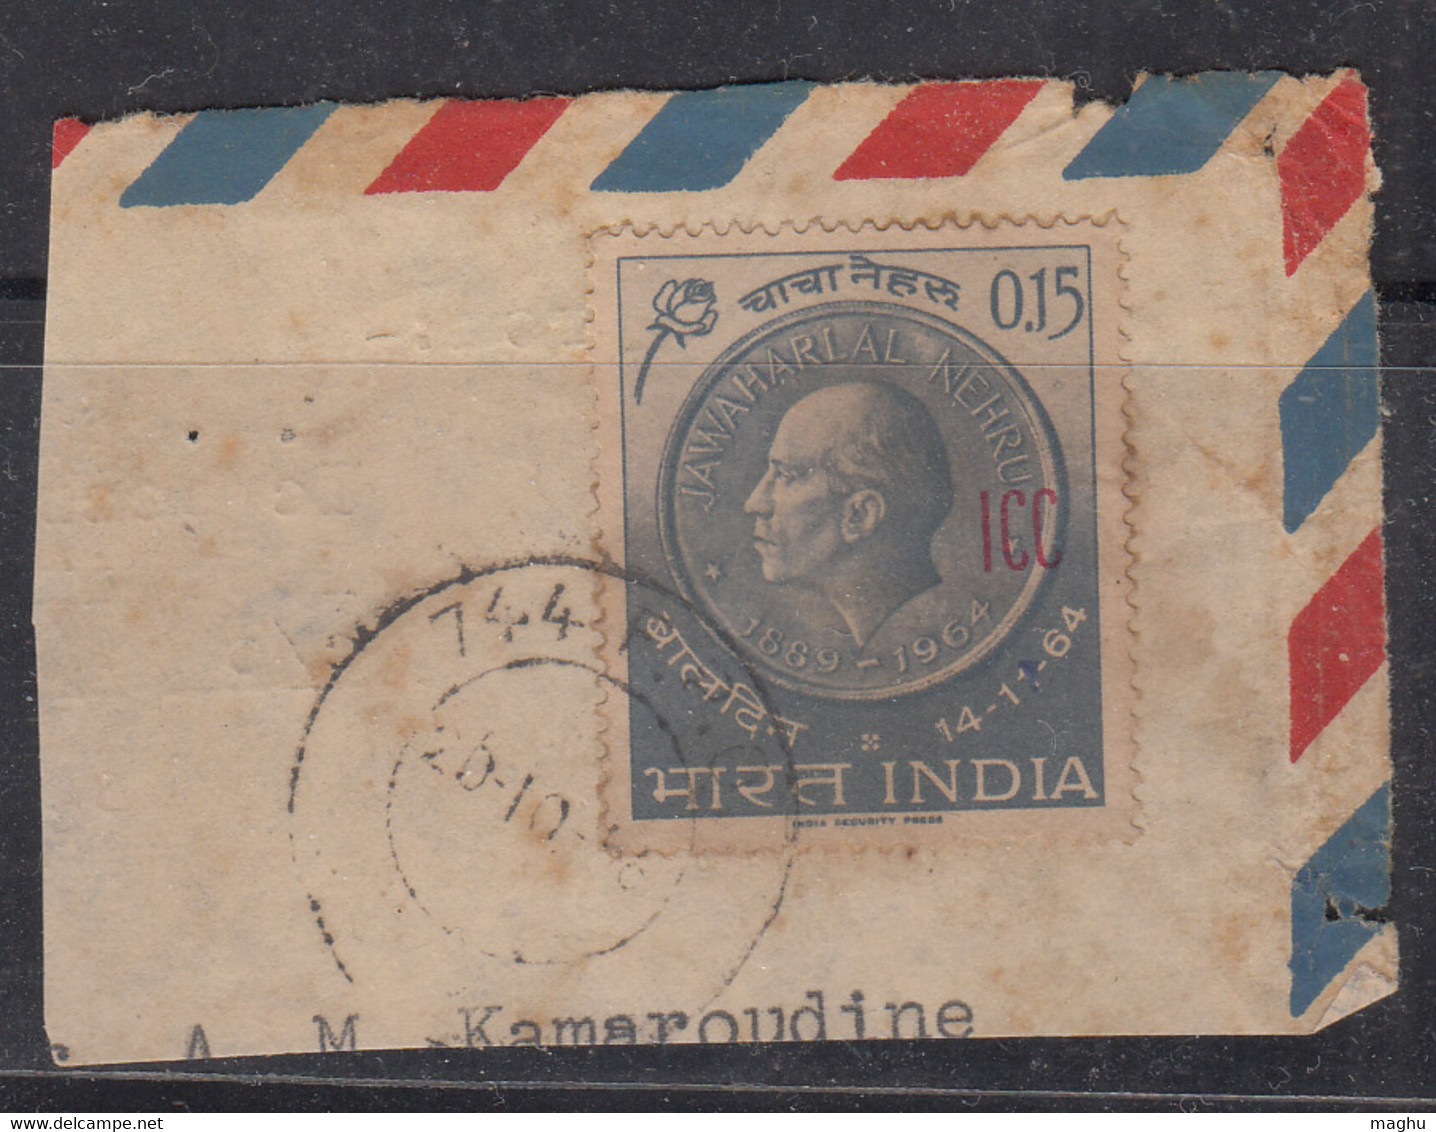 Postal Used On Piece, India Nehru Ovpt. I.C.C. FPO 744 Cancelation, India Military, 1965 ICC - Militaire Vrijstelling Van Portkosten